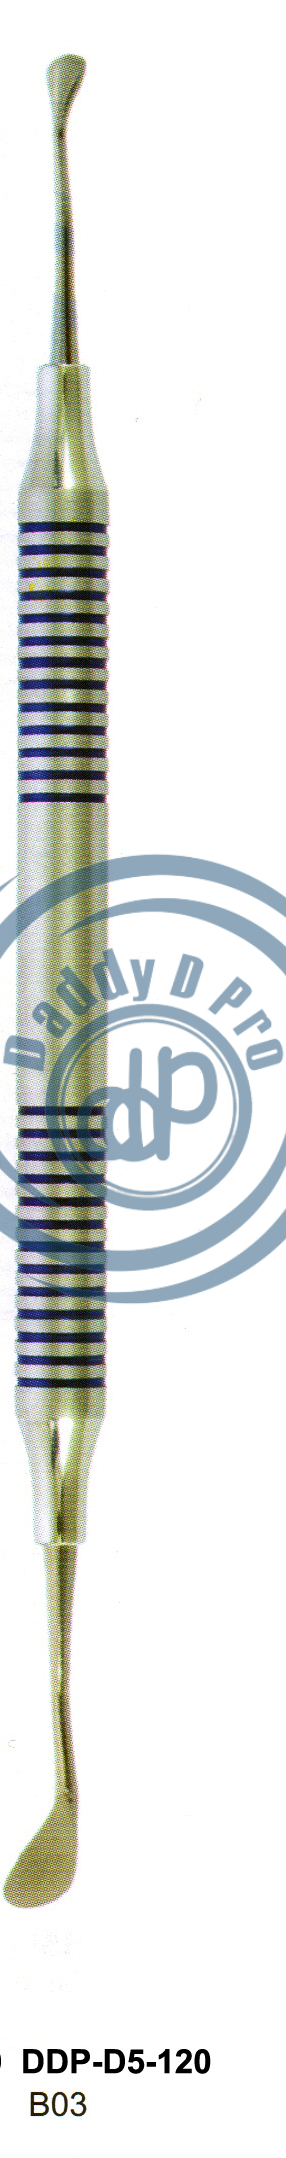 images/DDP-D5-120.png